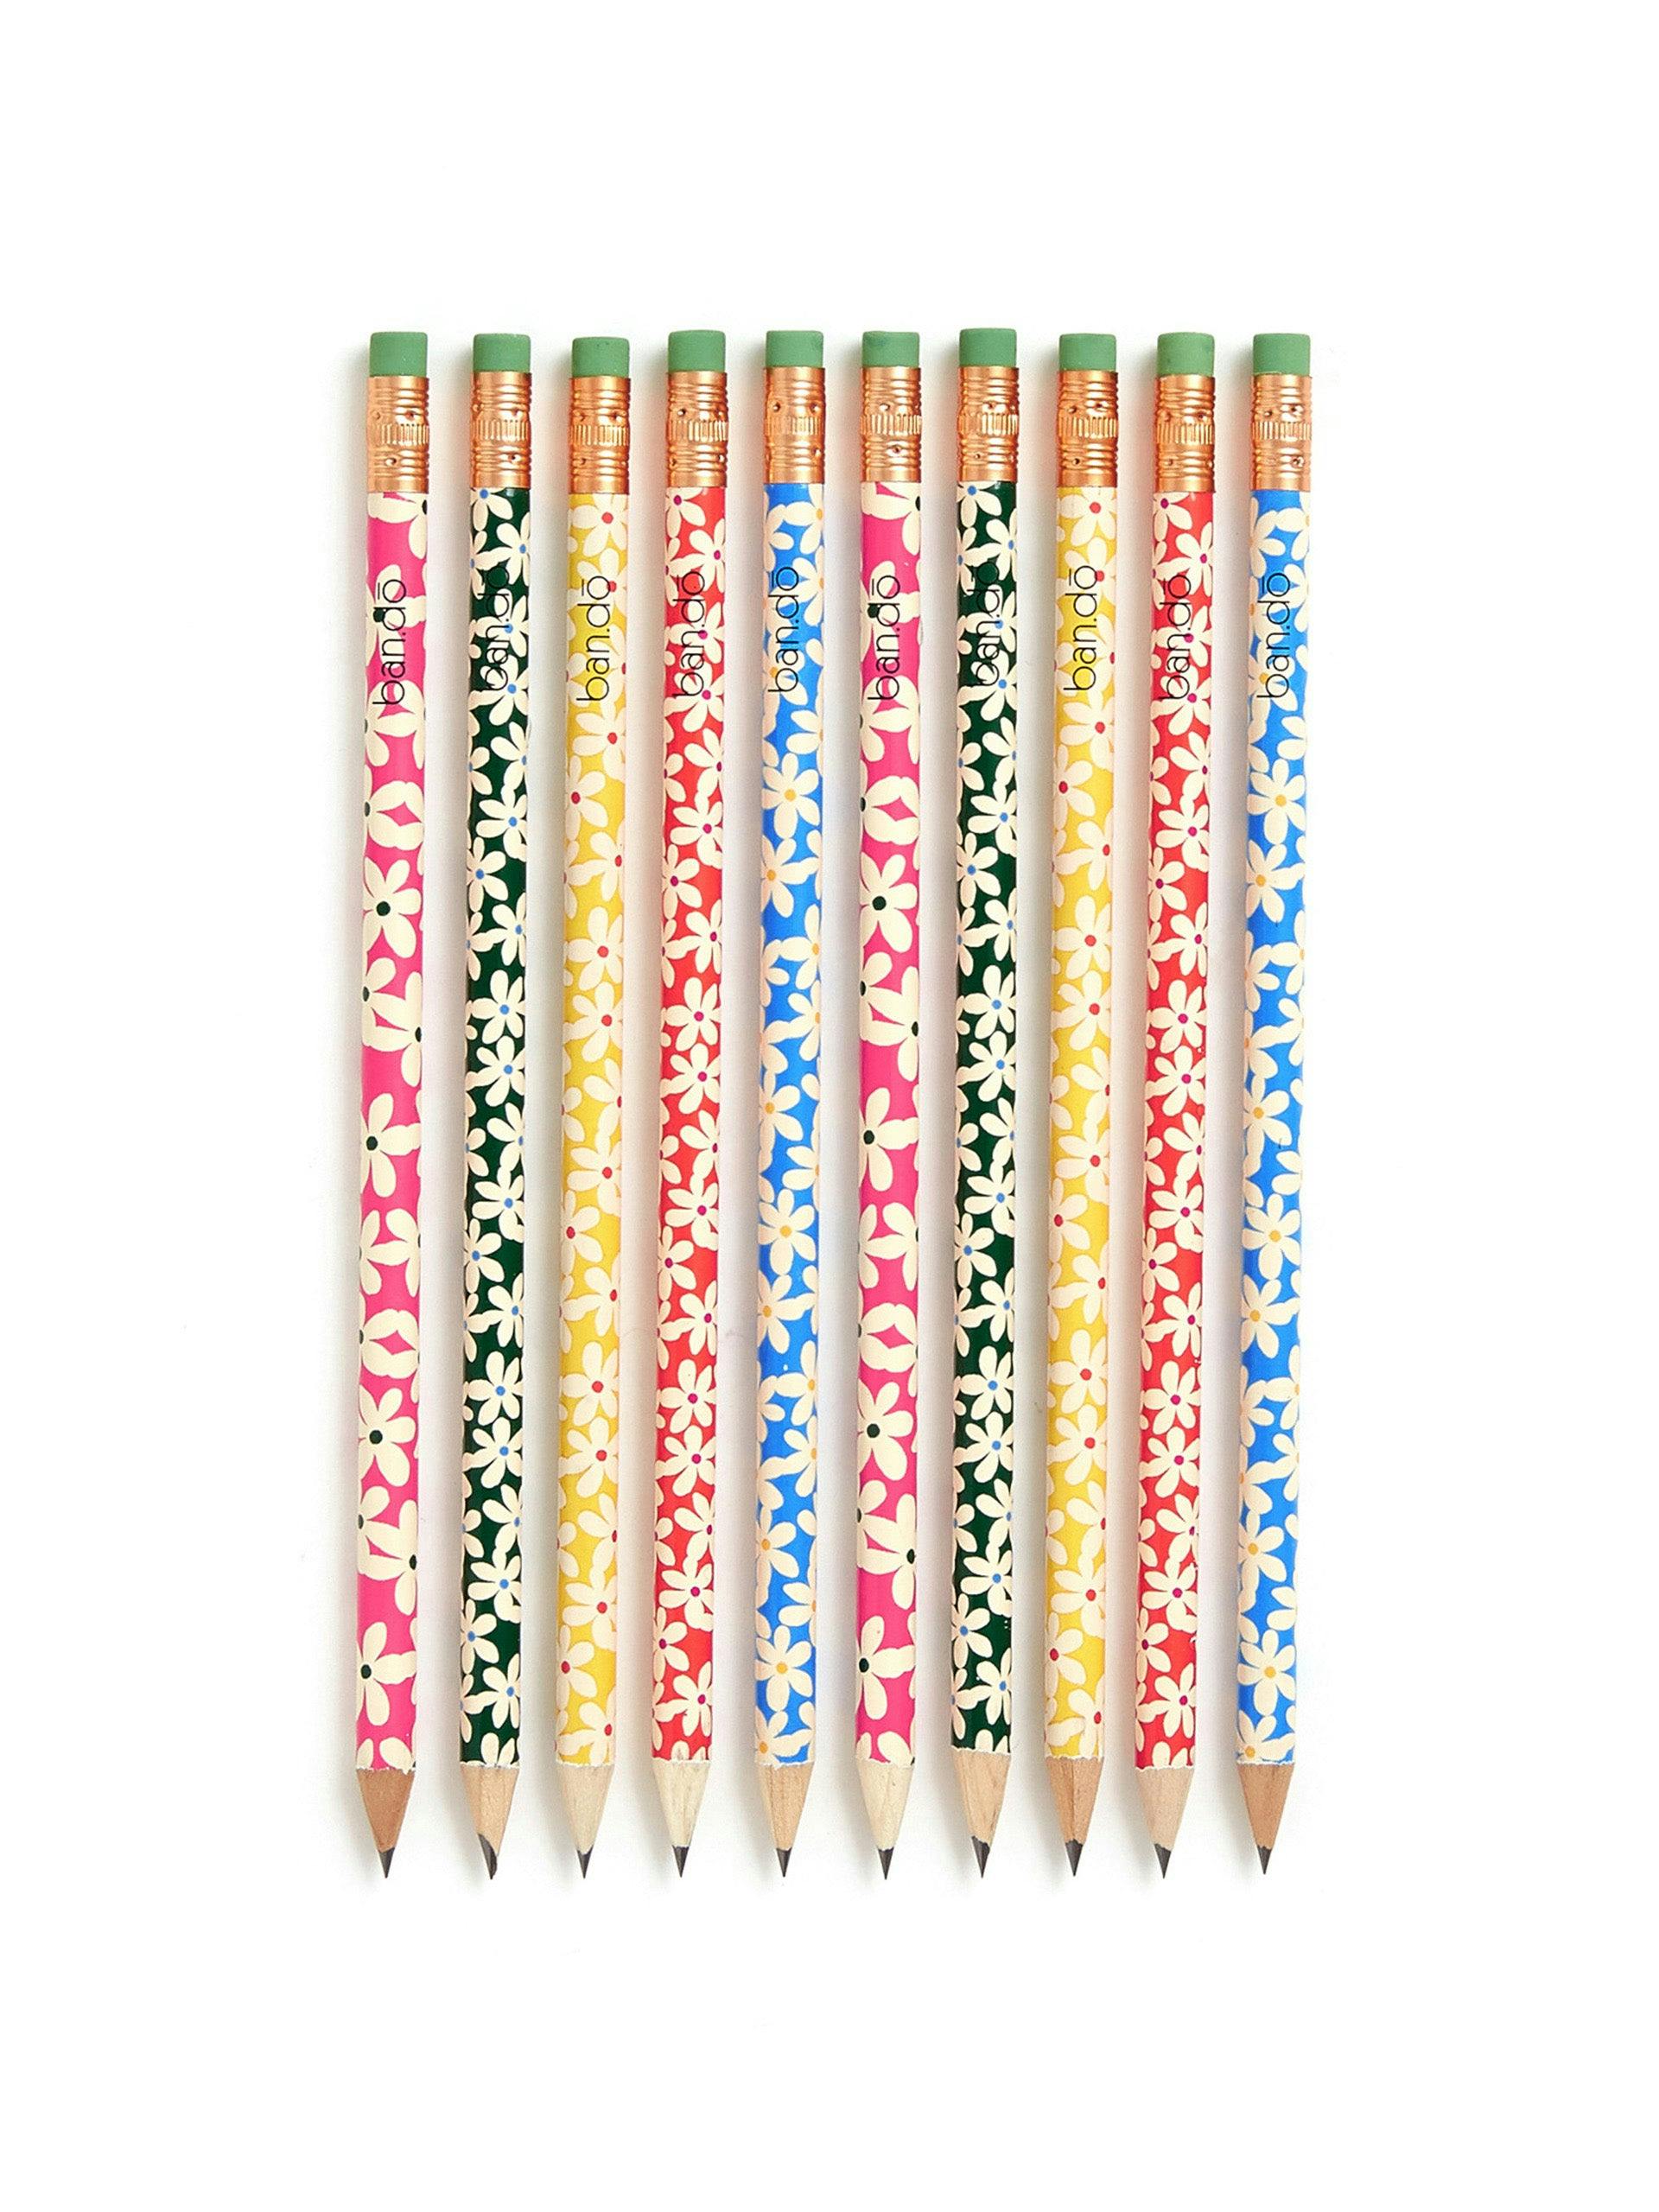 Pencils with daisy print